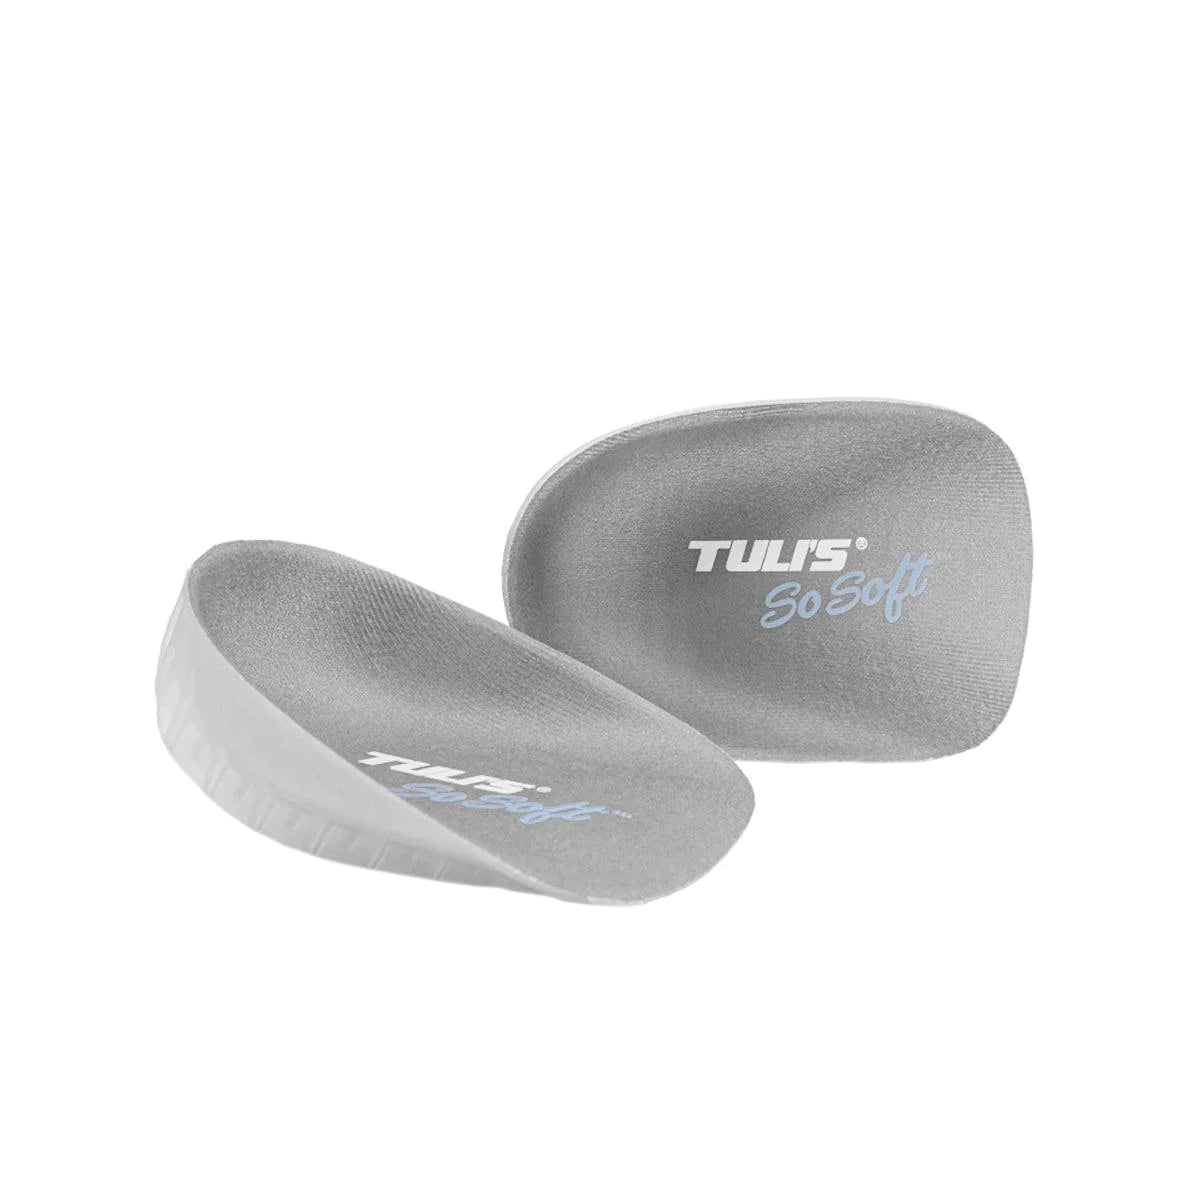 Tuli's So Soft Heavy Duty Heel Cups